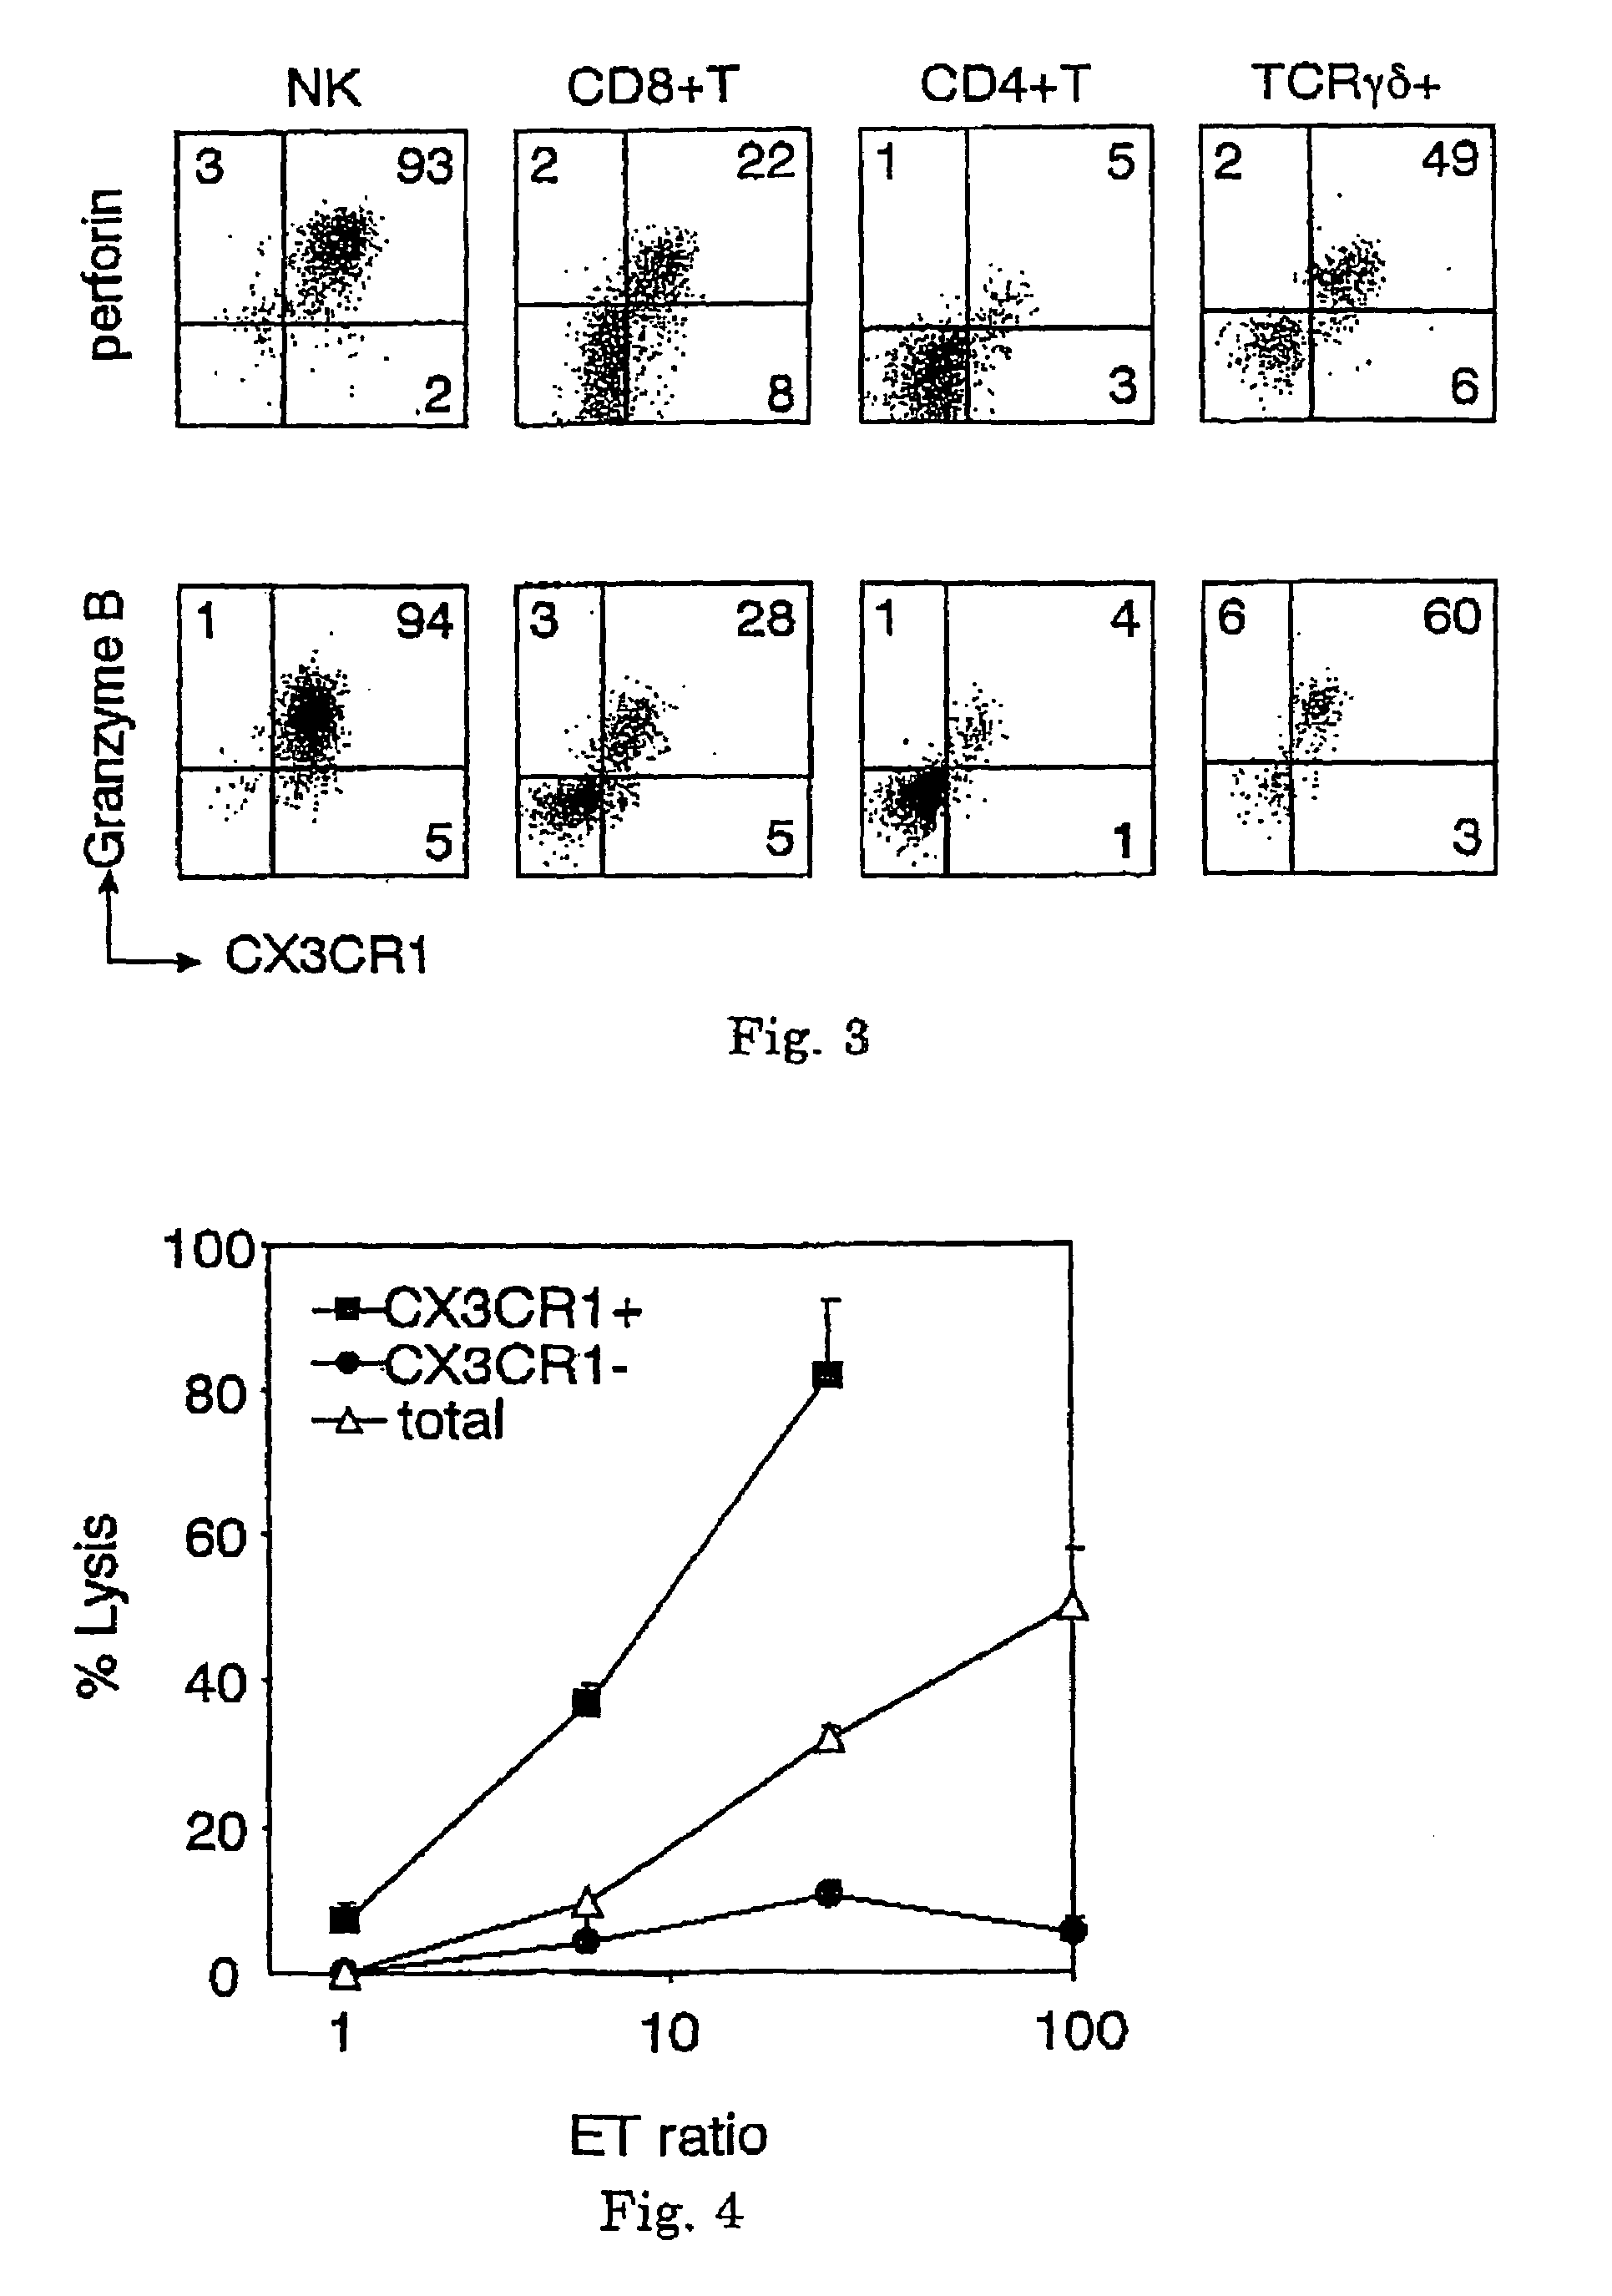 Uses of anti-CX3CR1 antibody, anti-fractalkine antibody and fractalkine